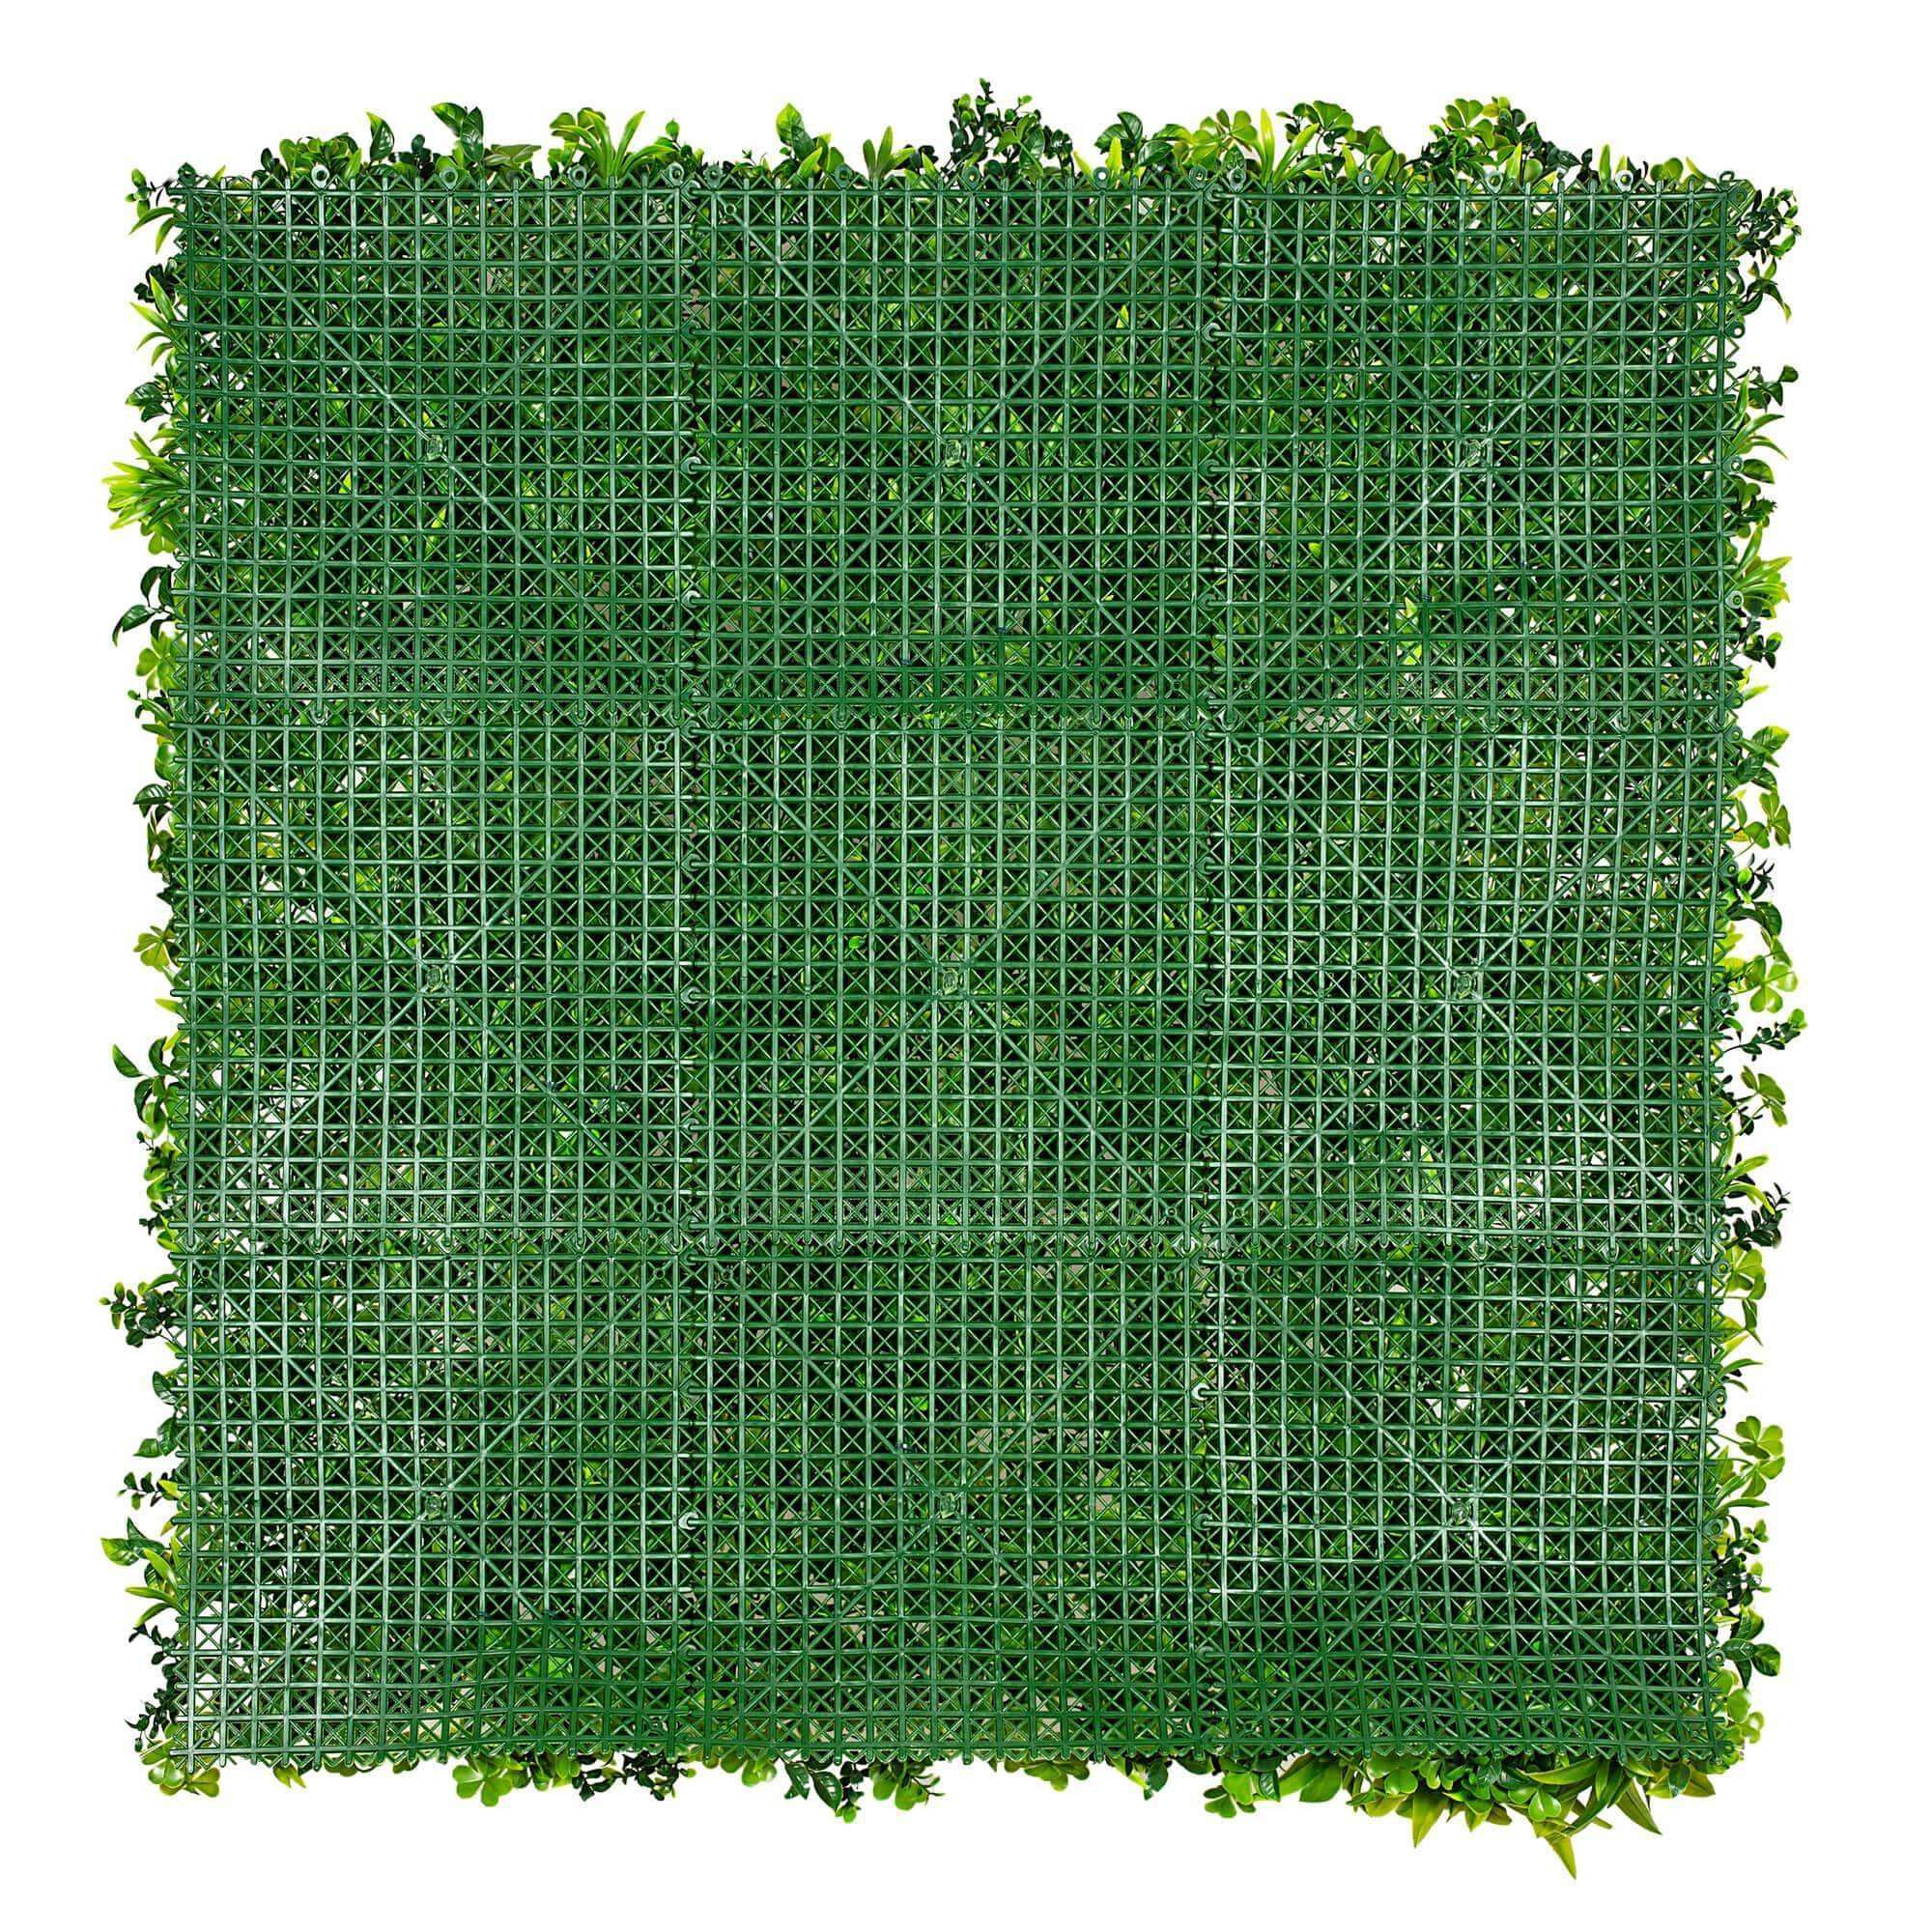 White Lily Artificial Vertical Garden / Fake Green Wall 1m x 1m UV Resistant - Designer Vertical Gardens artificial garden wall plants artificial green wall australia